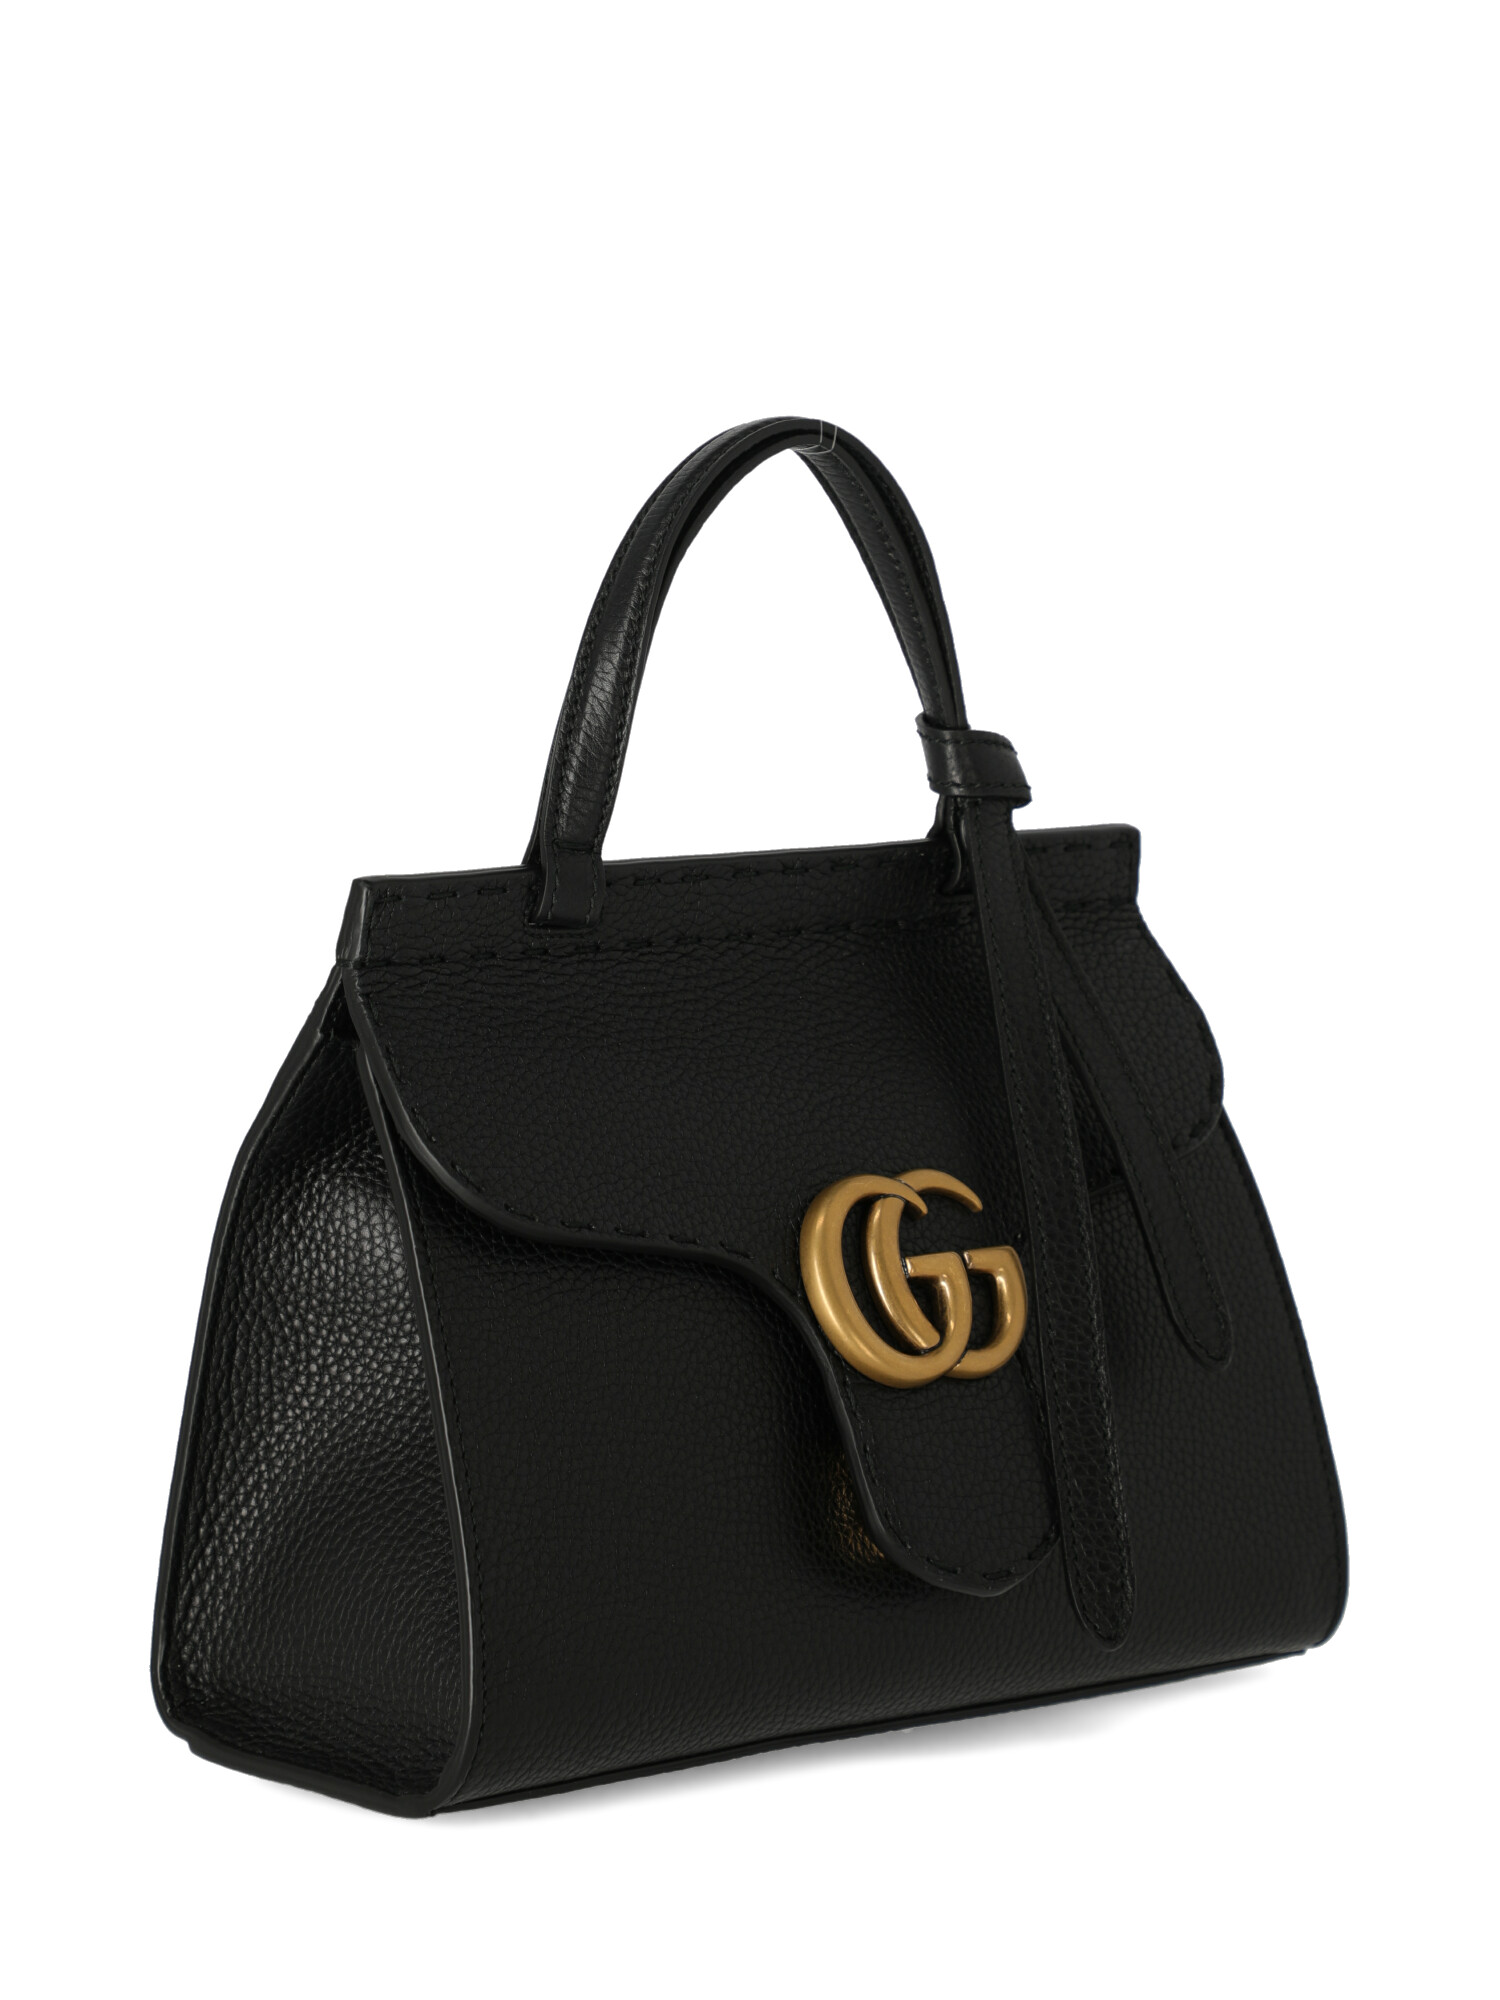 Gucci Special Price Women Handbags Marmont Black | eBay